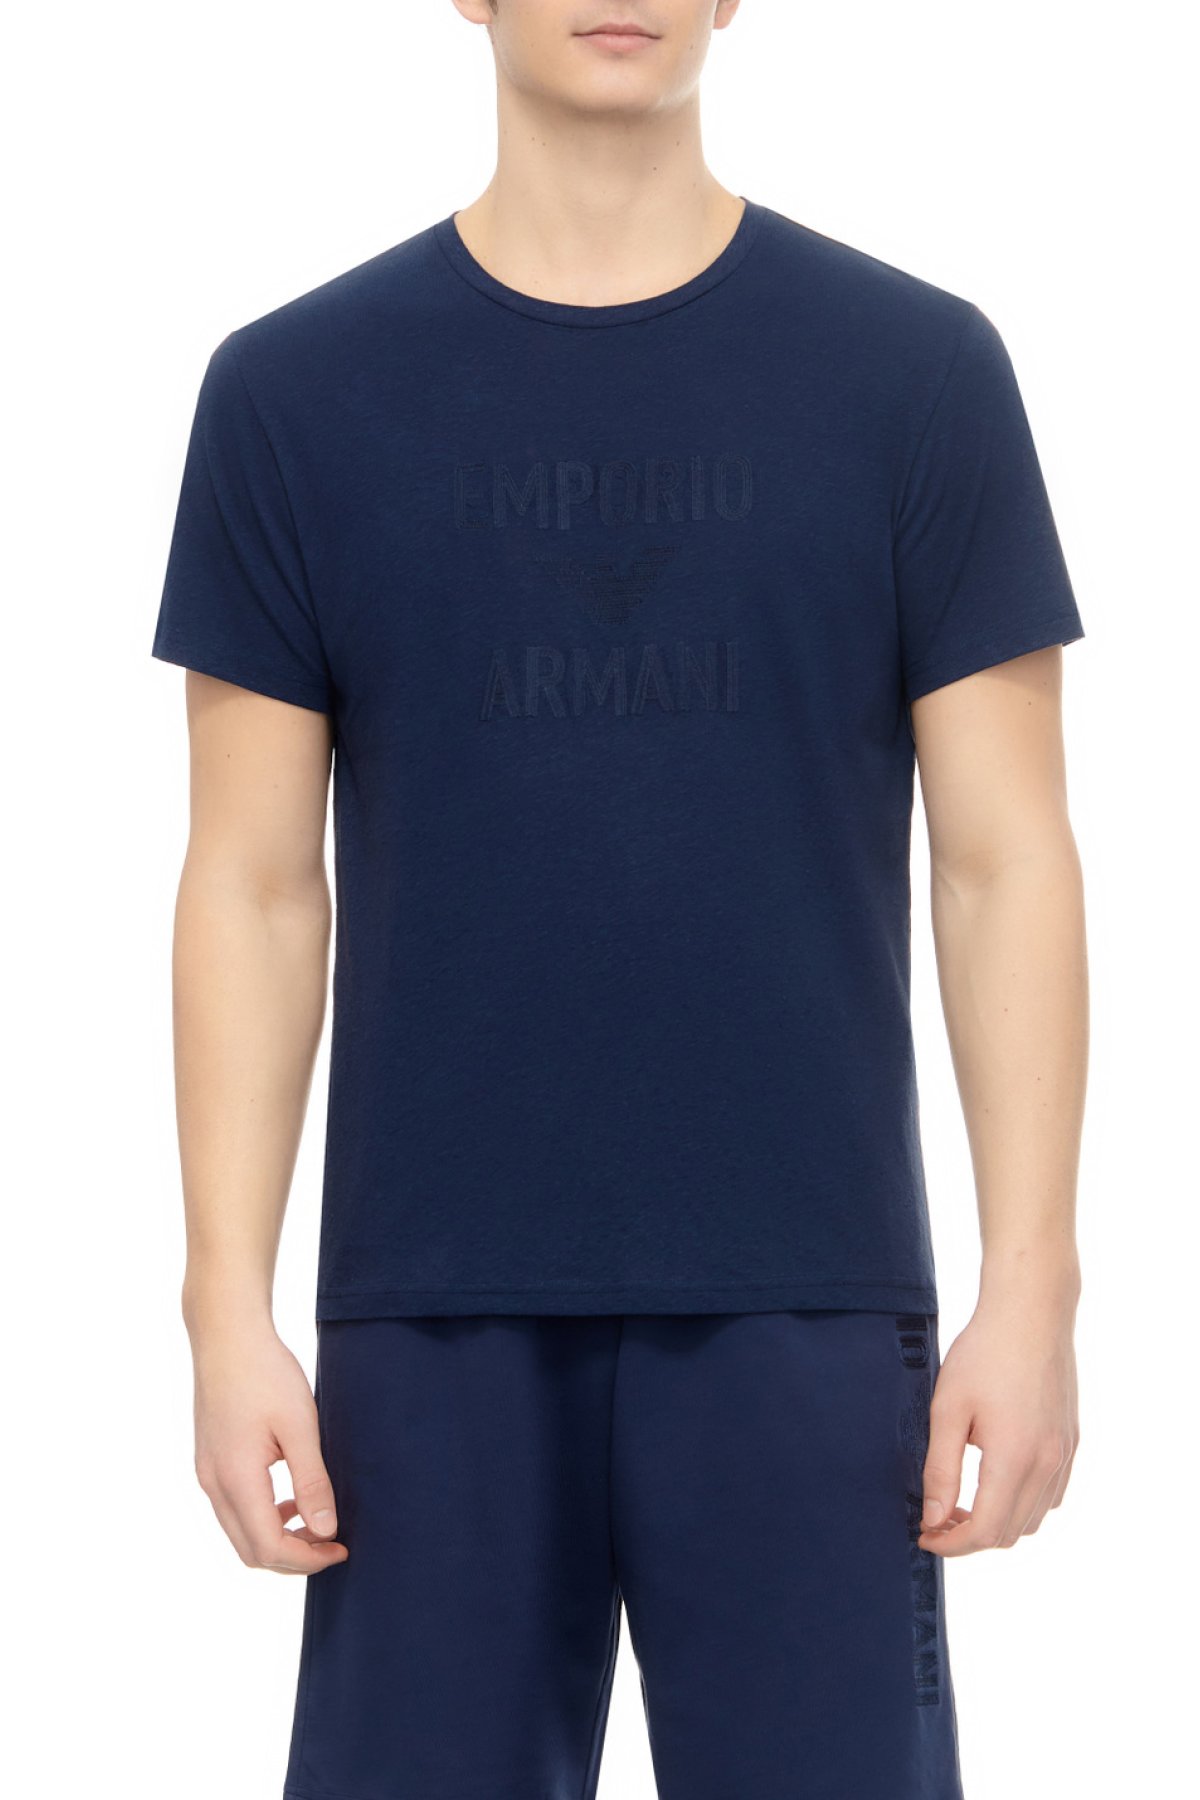 Emporio Armani 211818 4R485 tričko modré